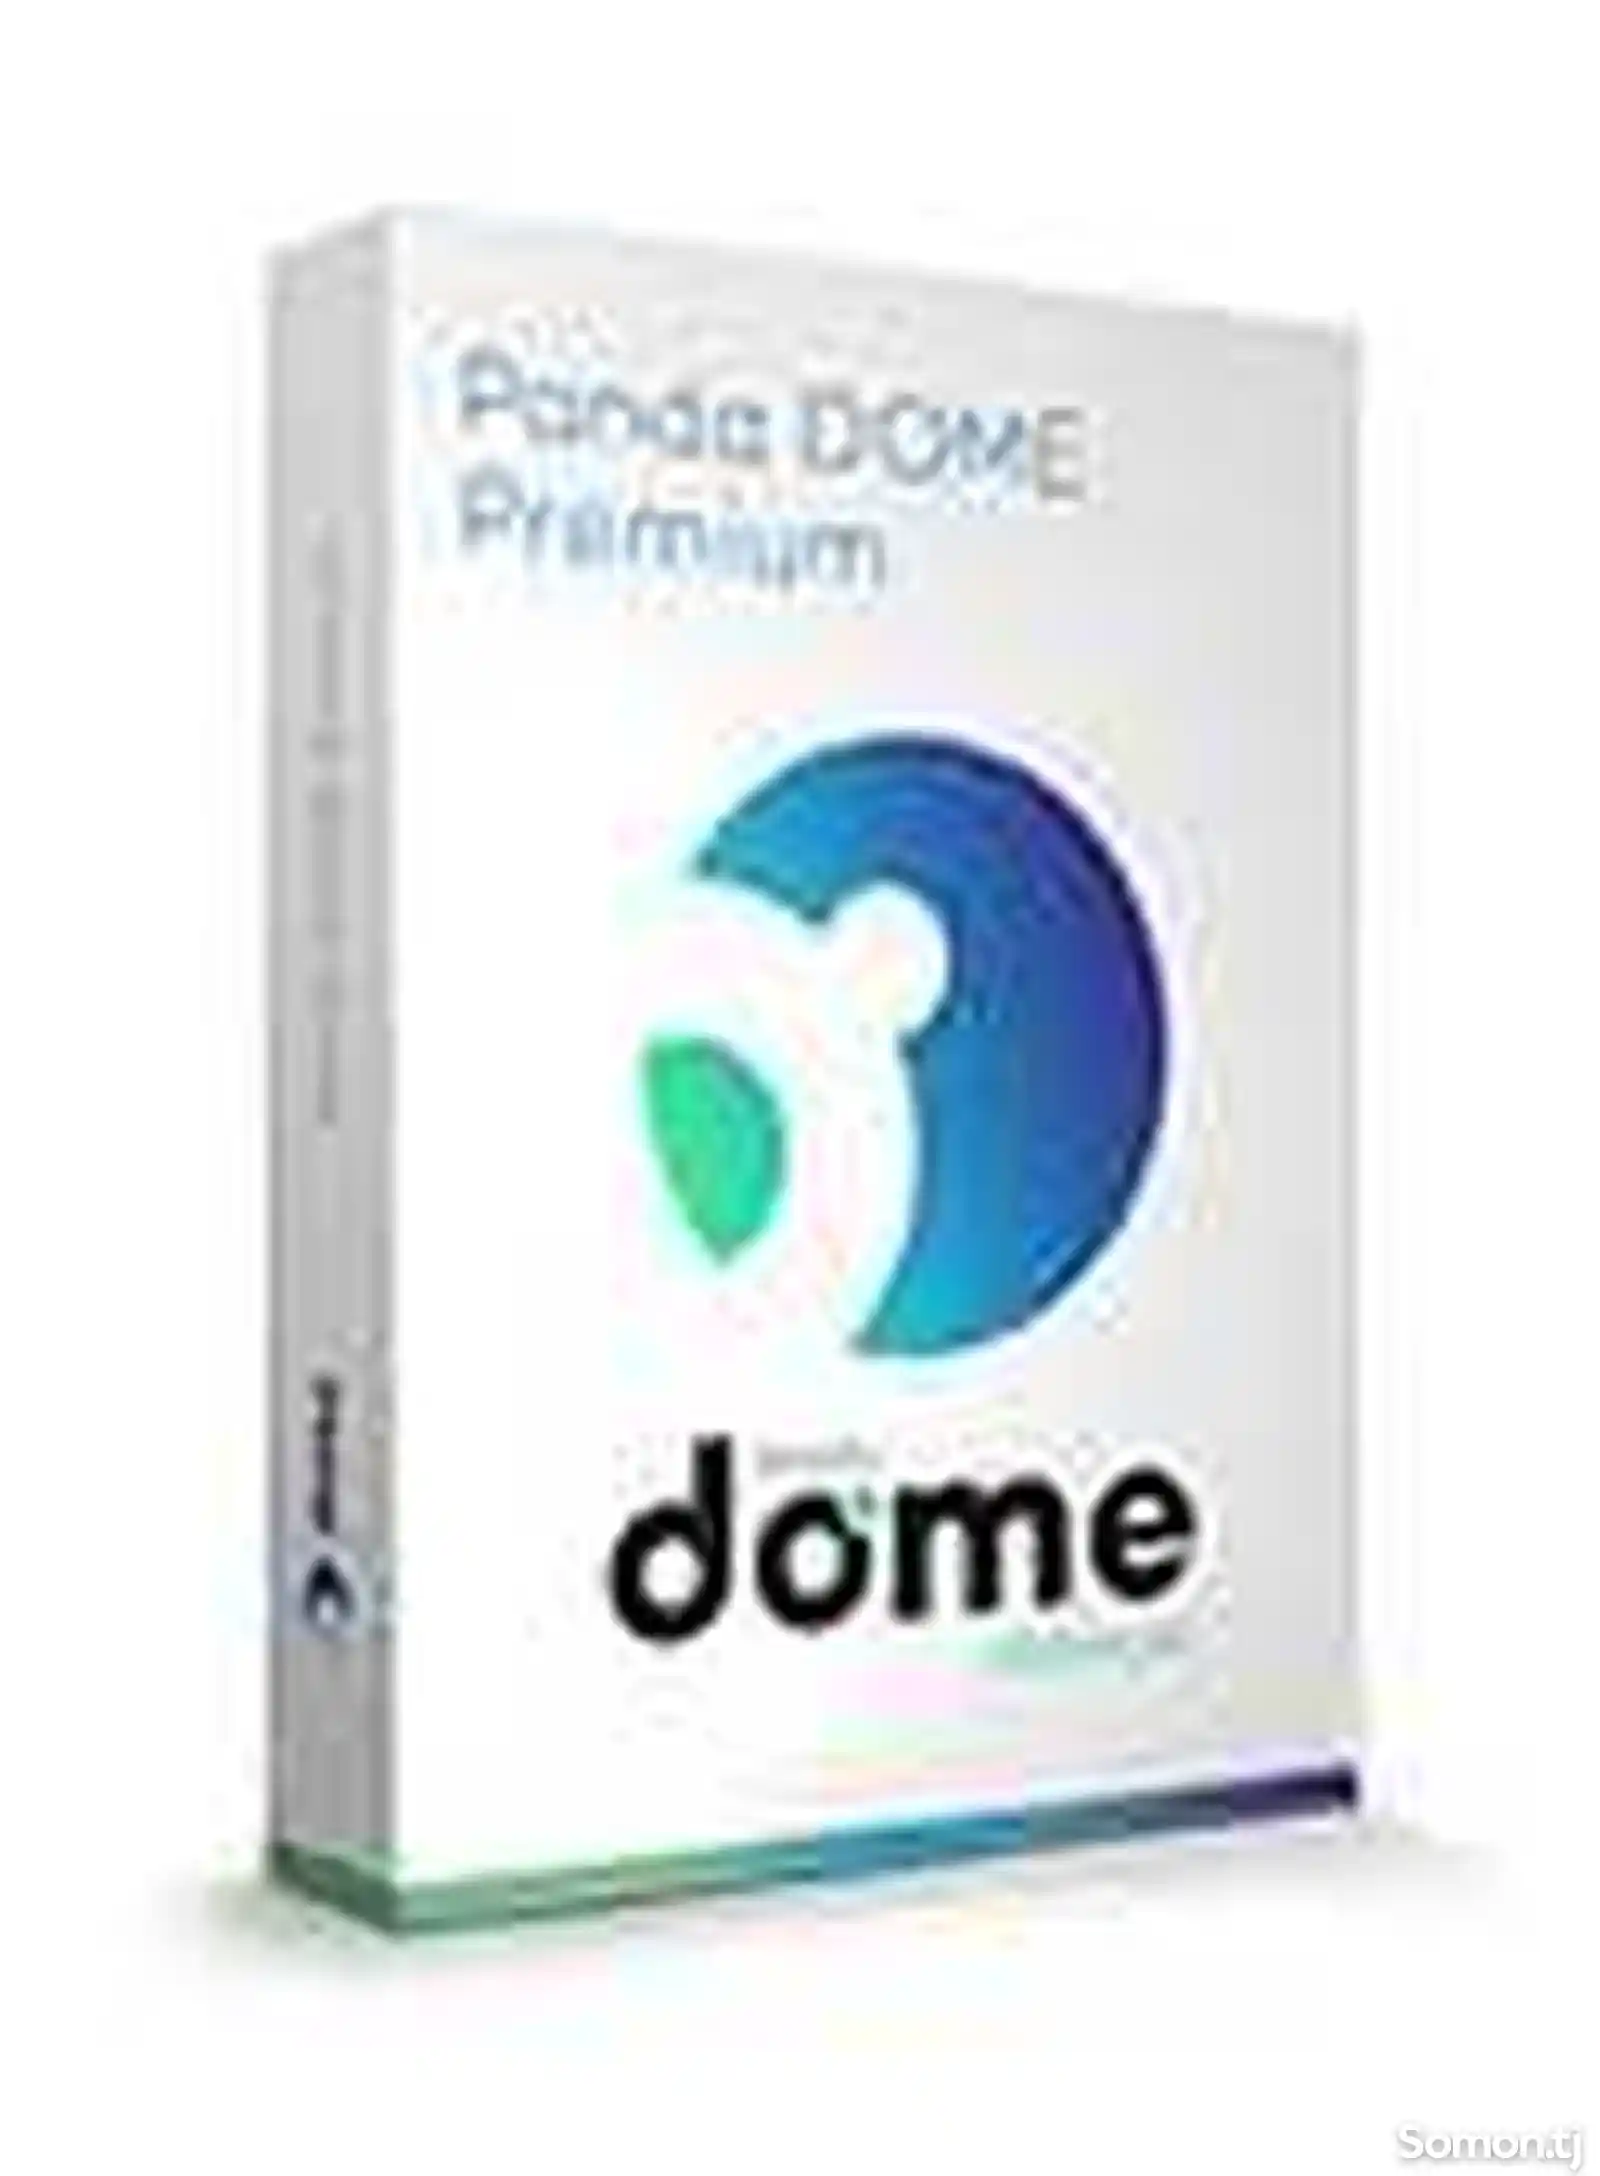 Panda Dome Premium - иҷозатнома барои 5 роёна, 1 сол